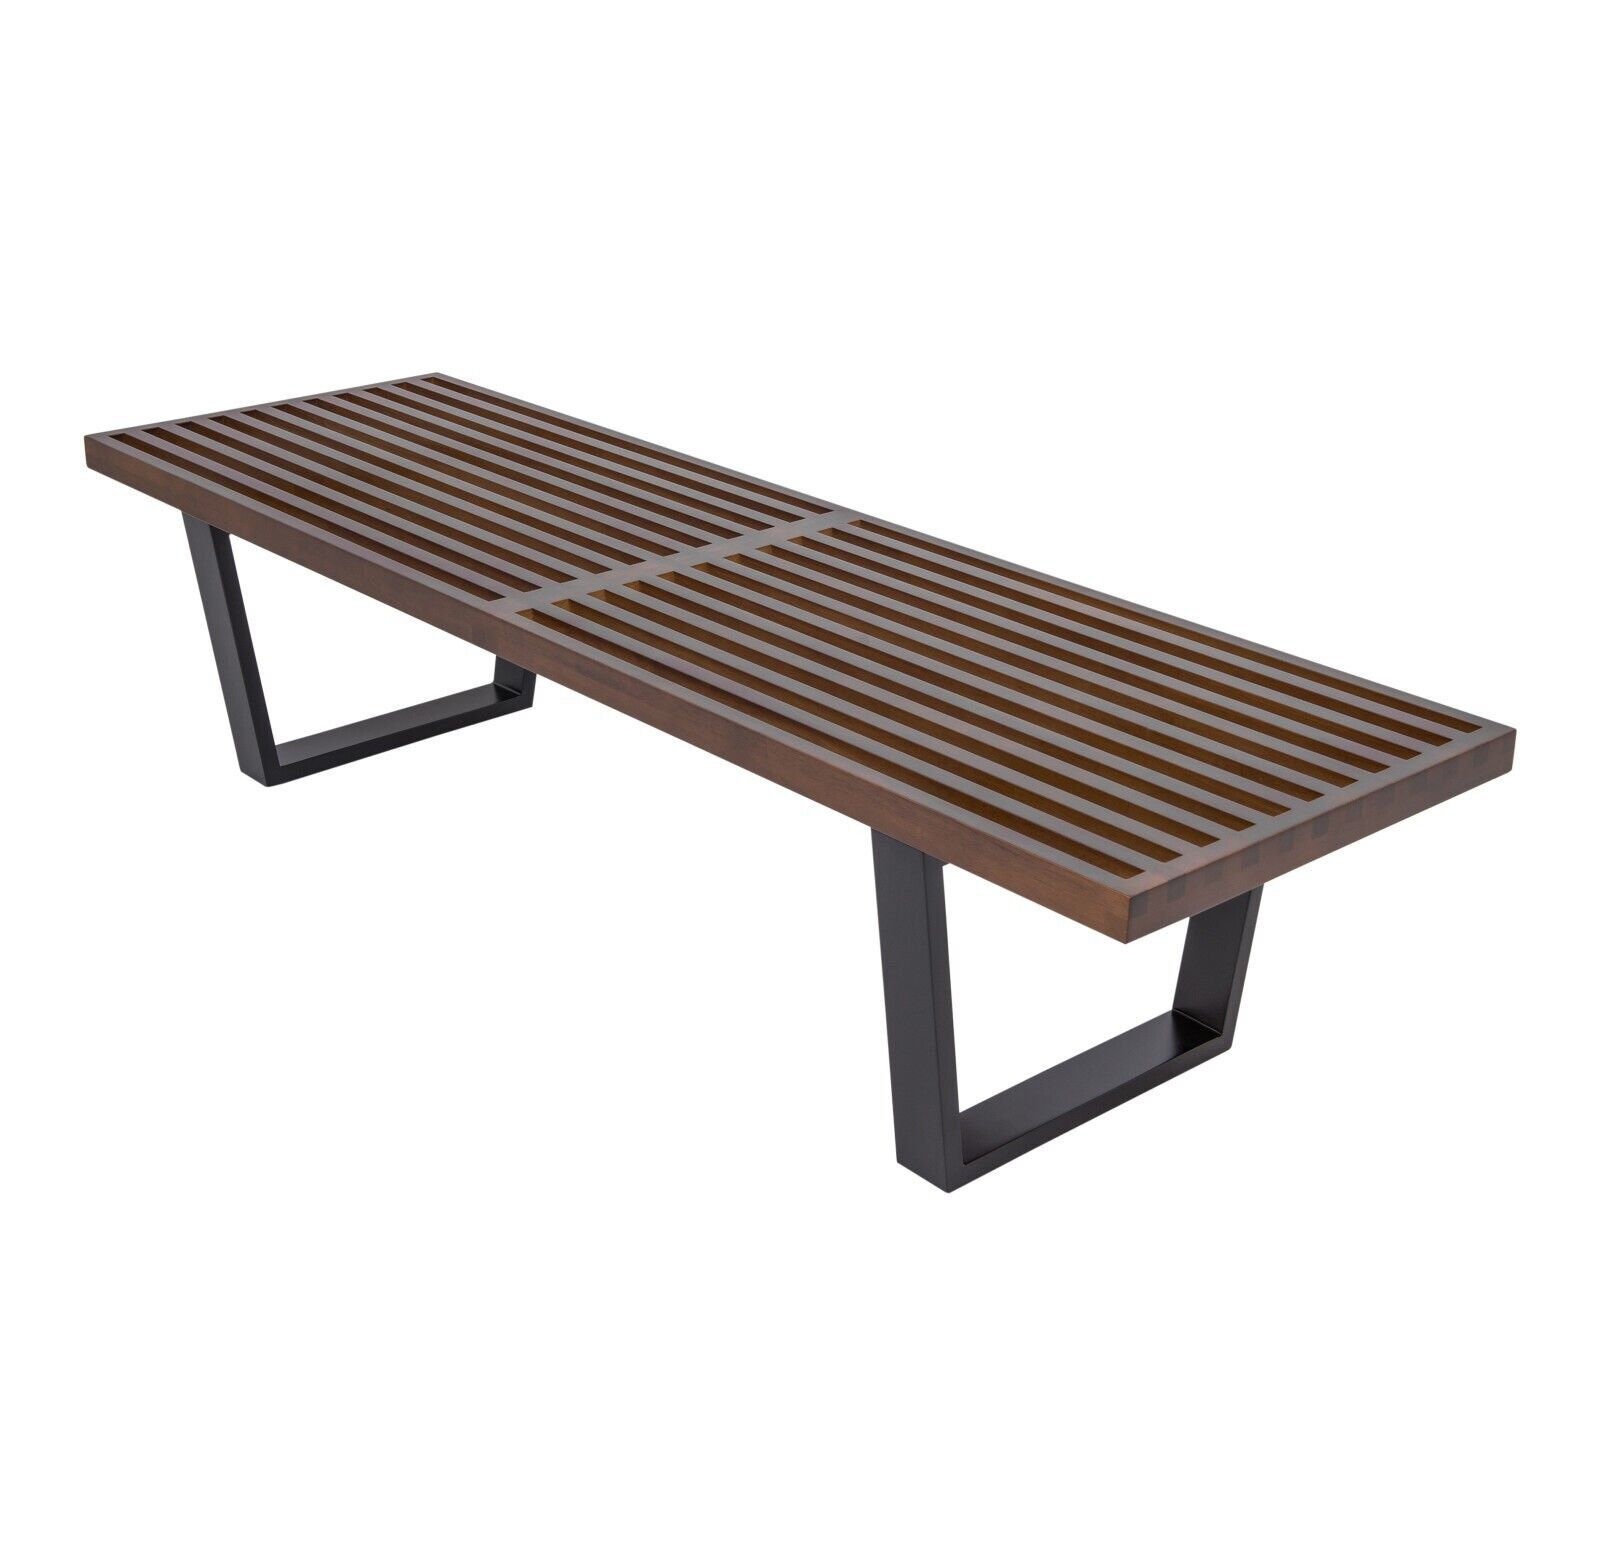 LeisureMod Mid-Century Inwood Platform Bench - 5 Feet